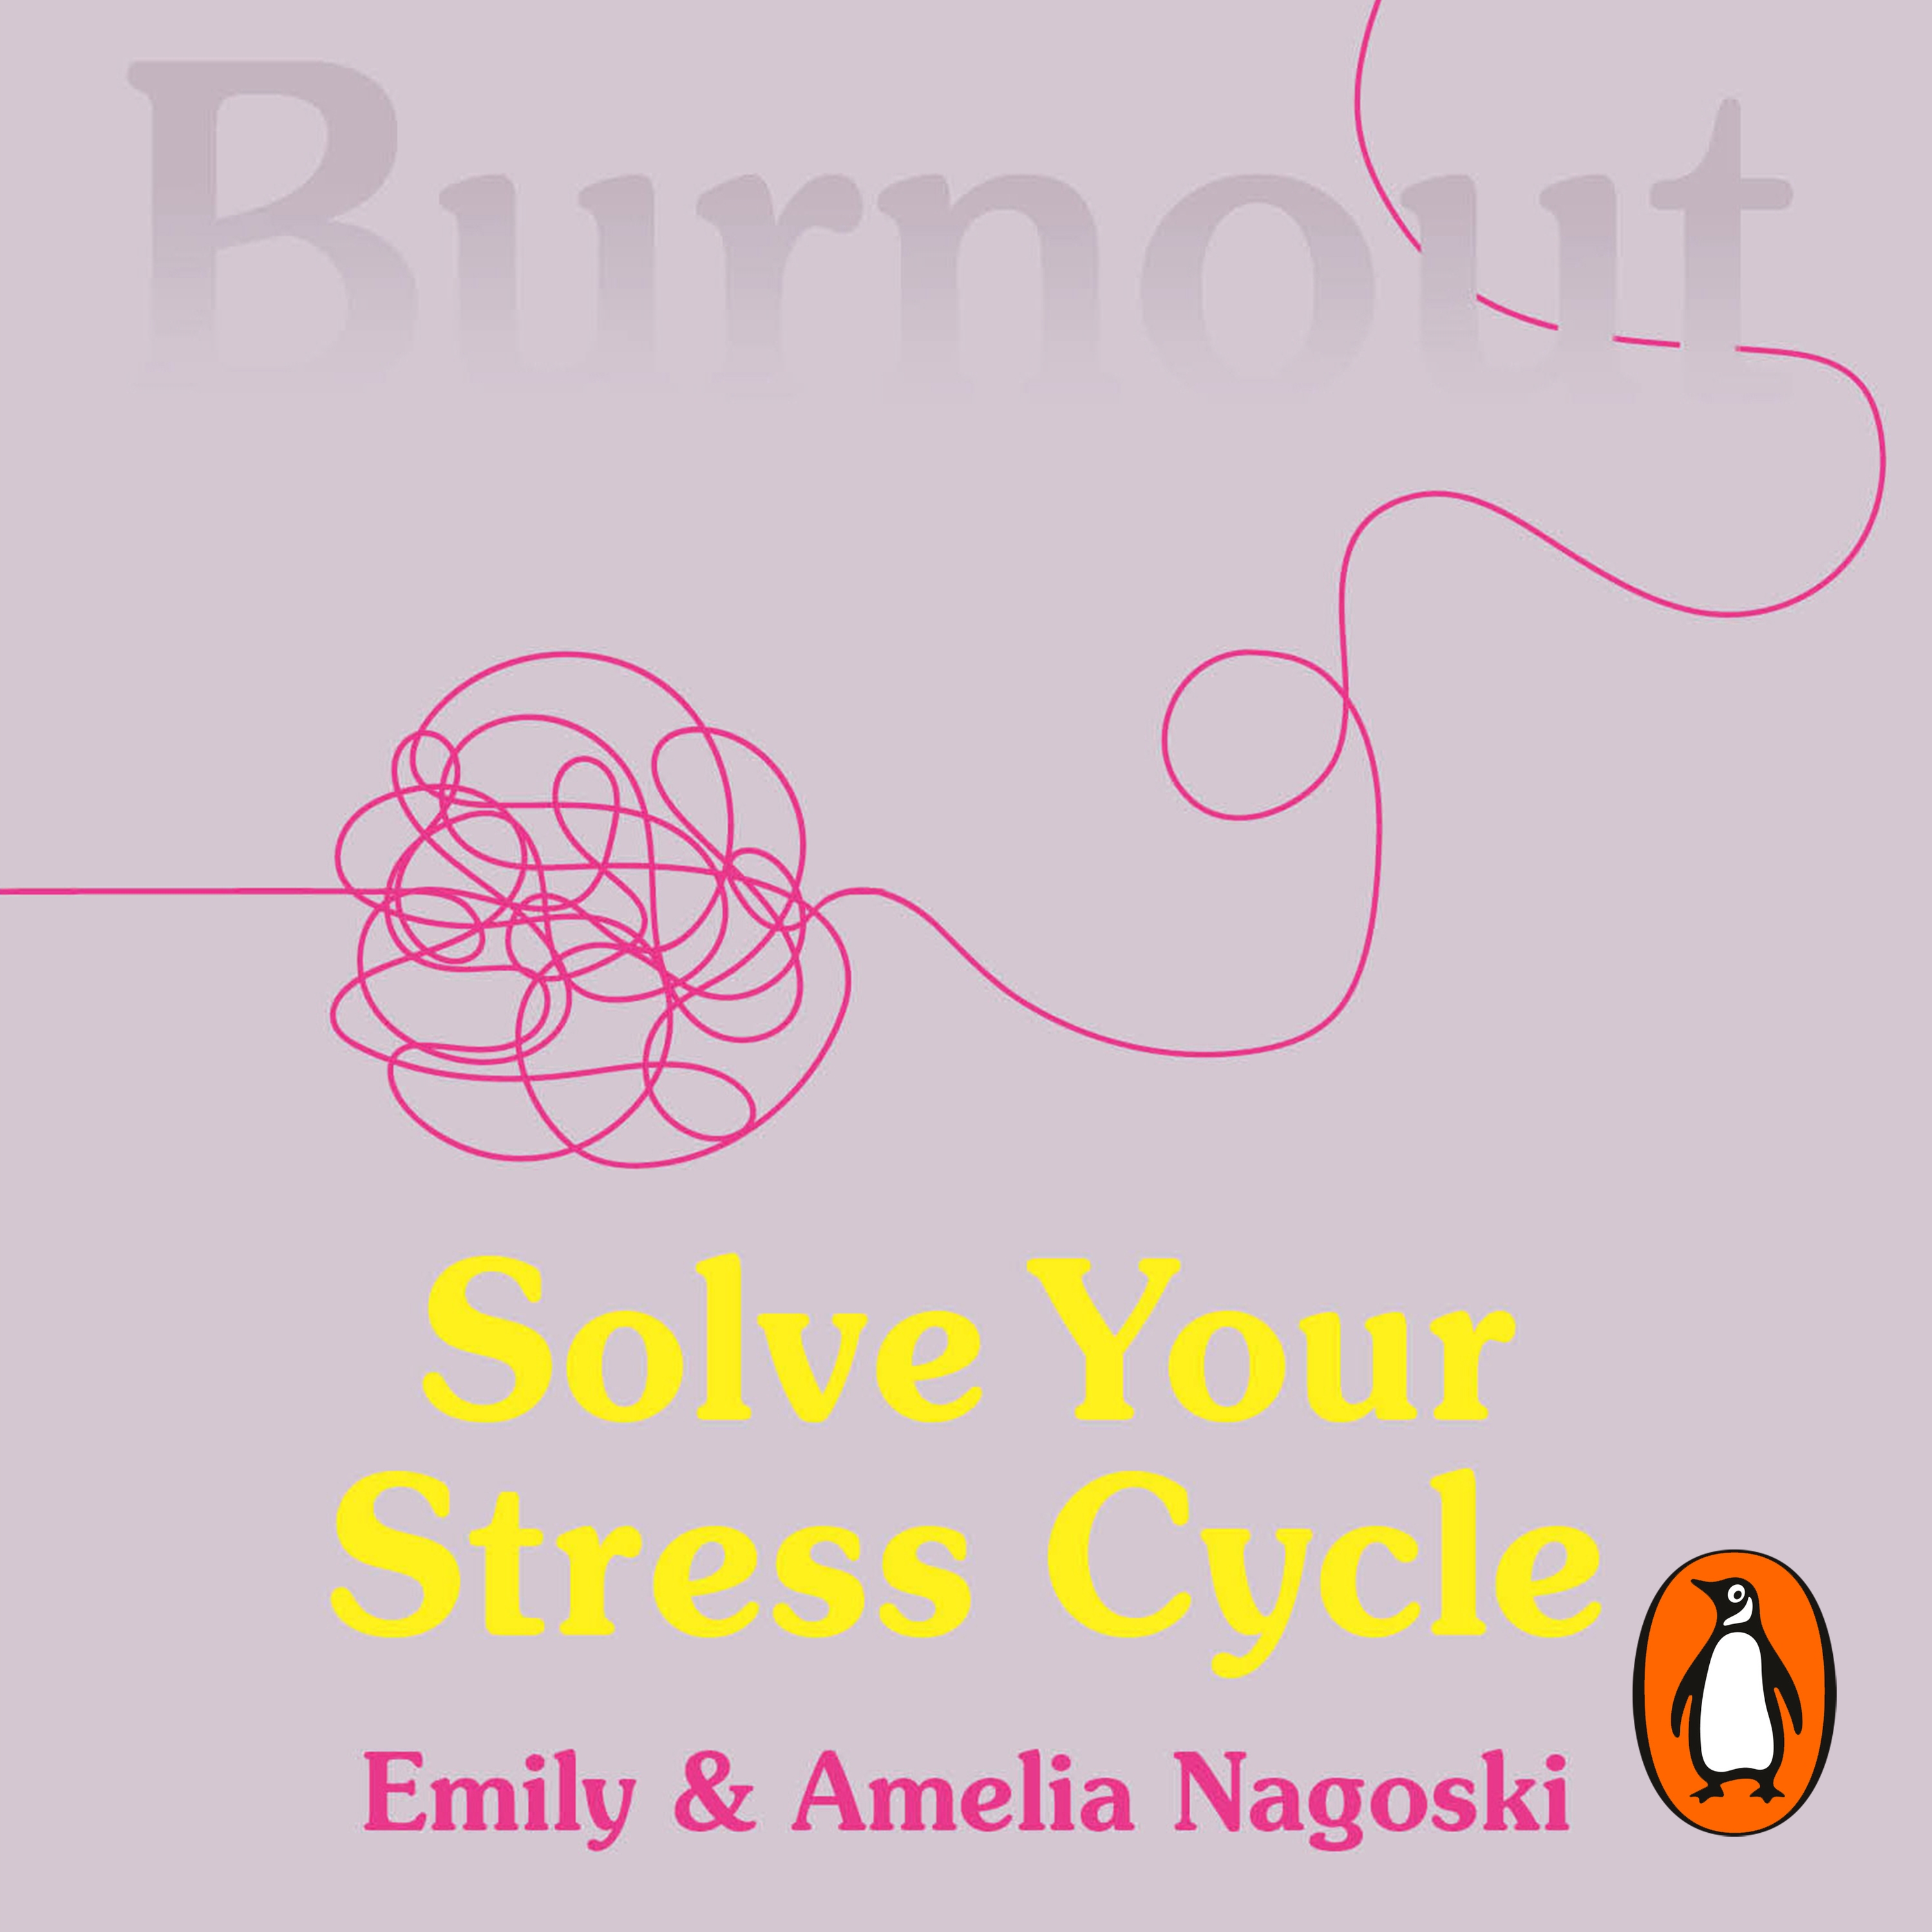 burnout by emily and amelia nagoski